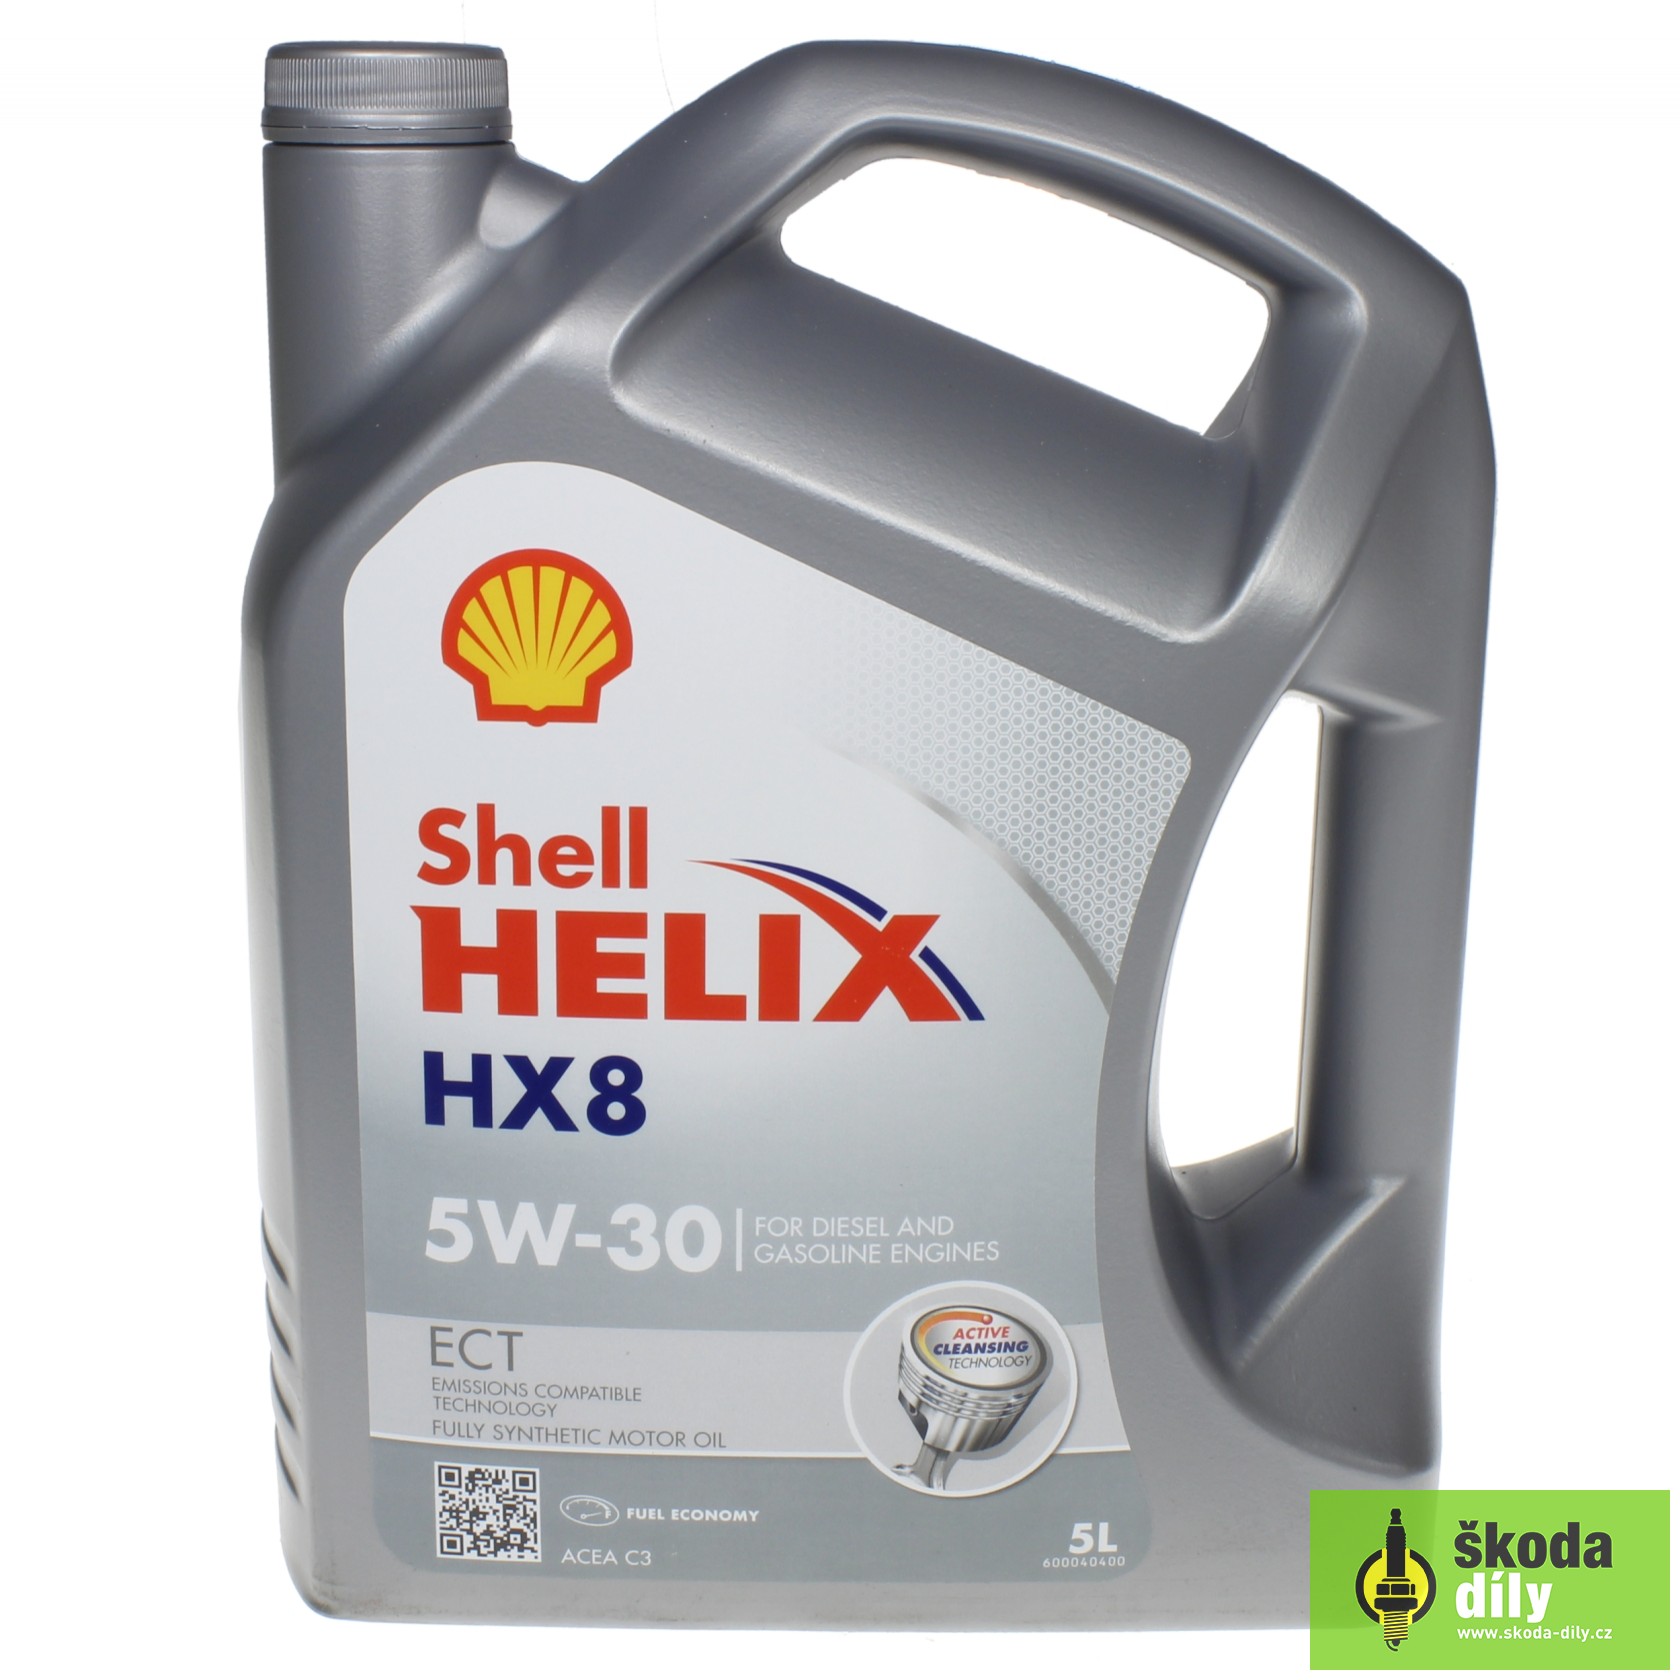 Shell helix 5w 30 купить